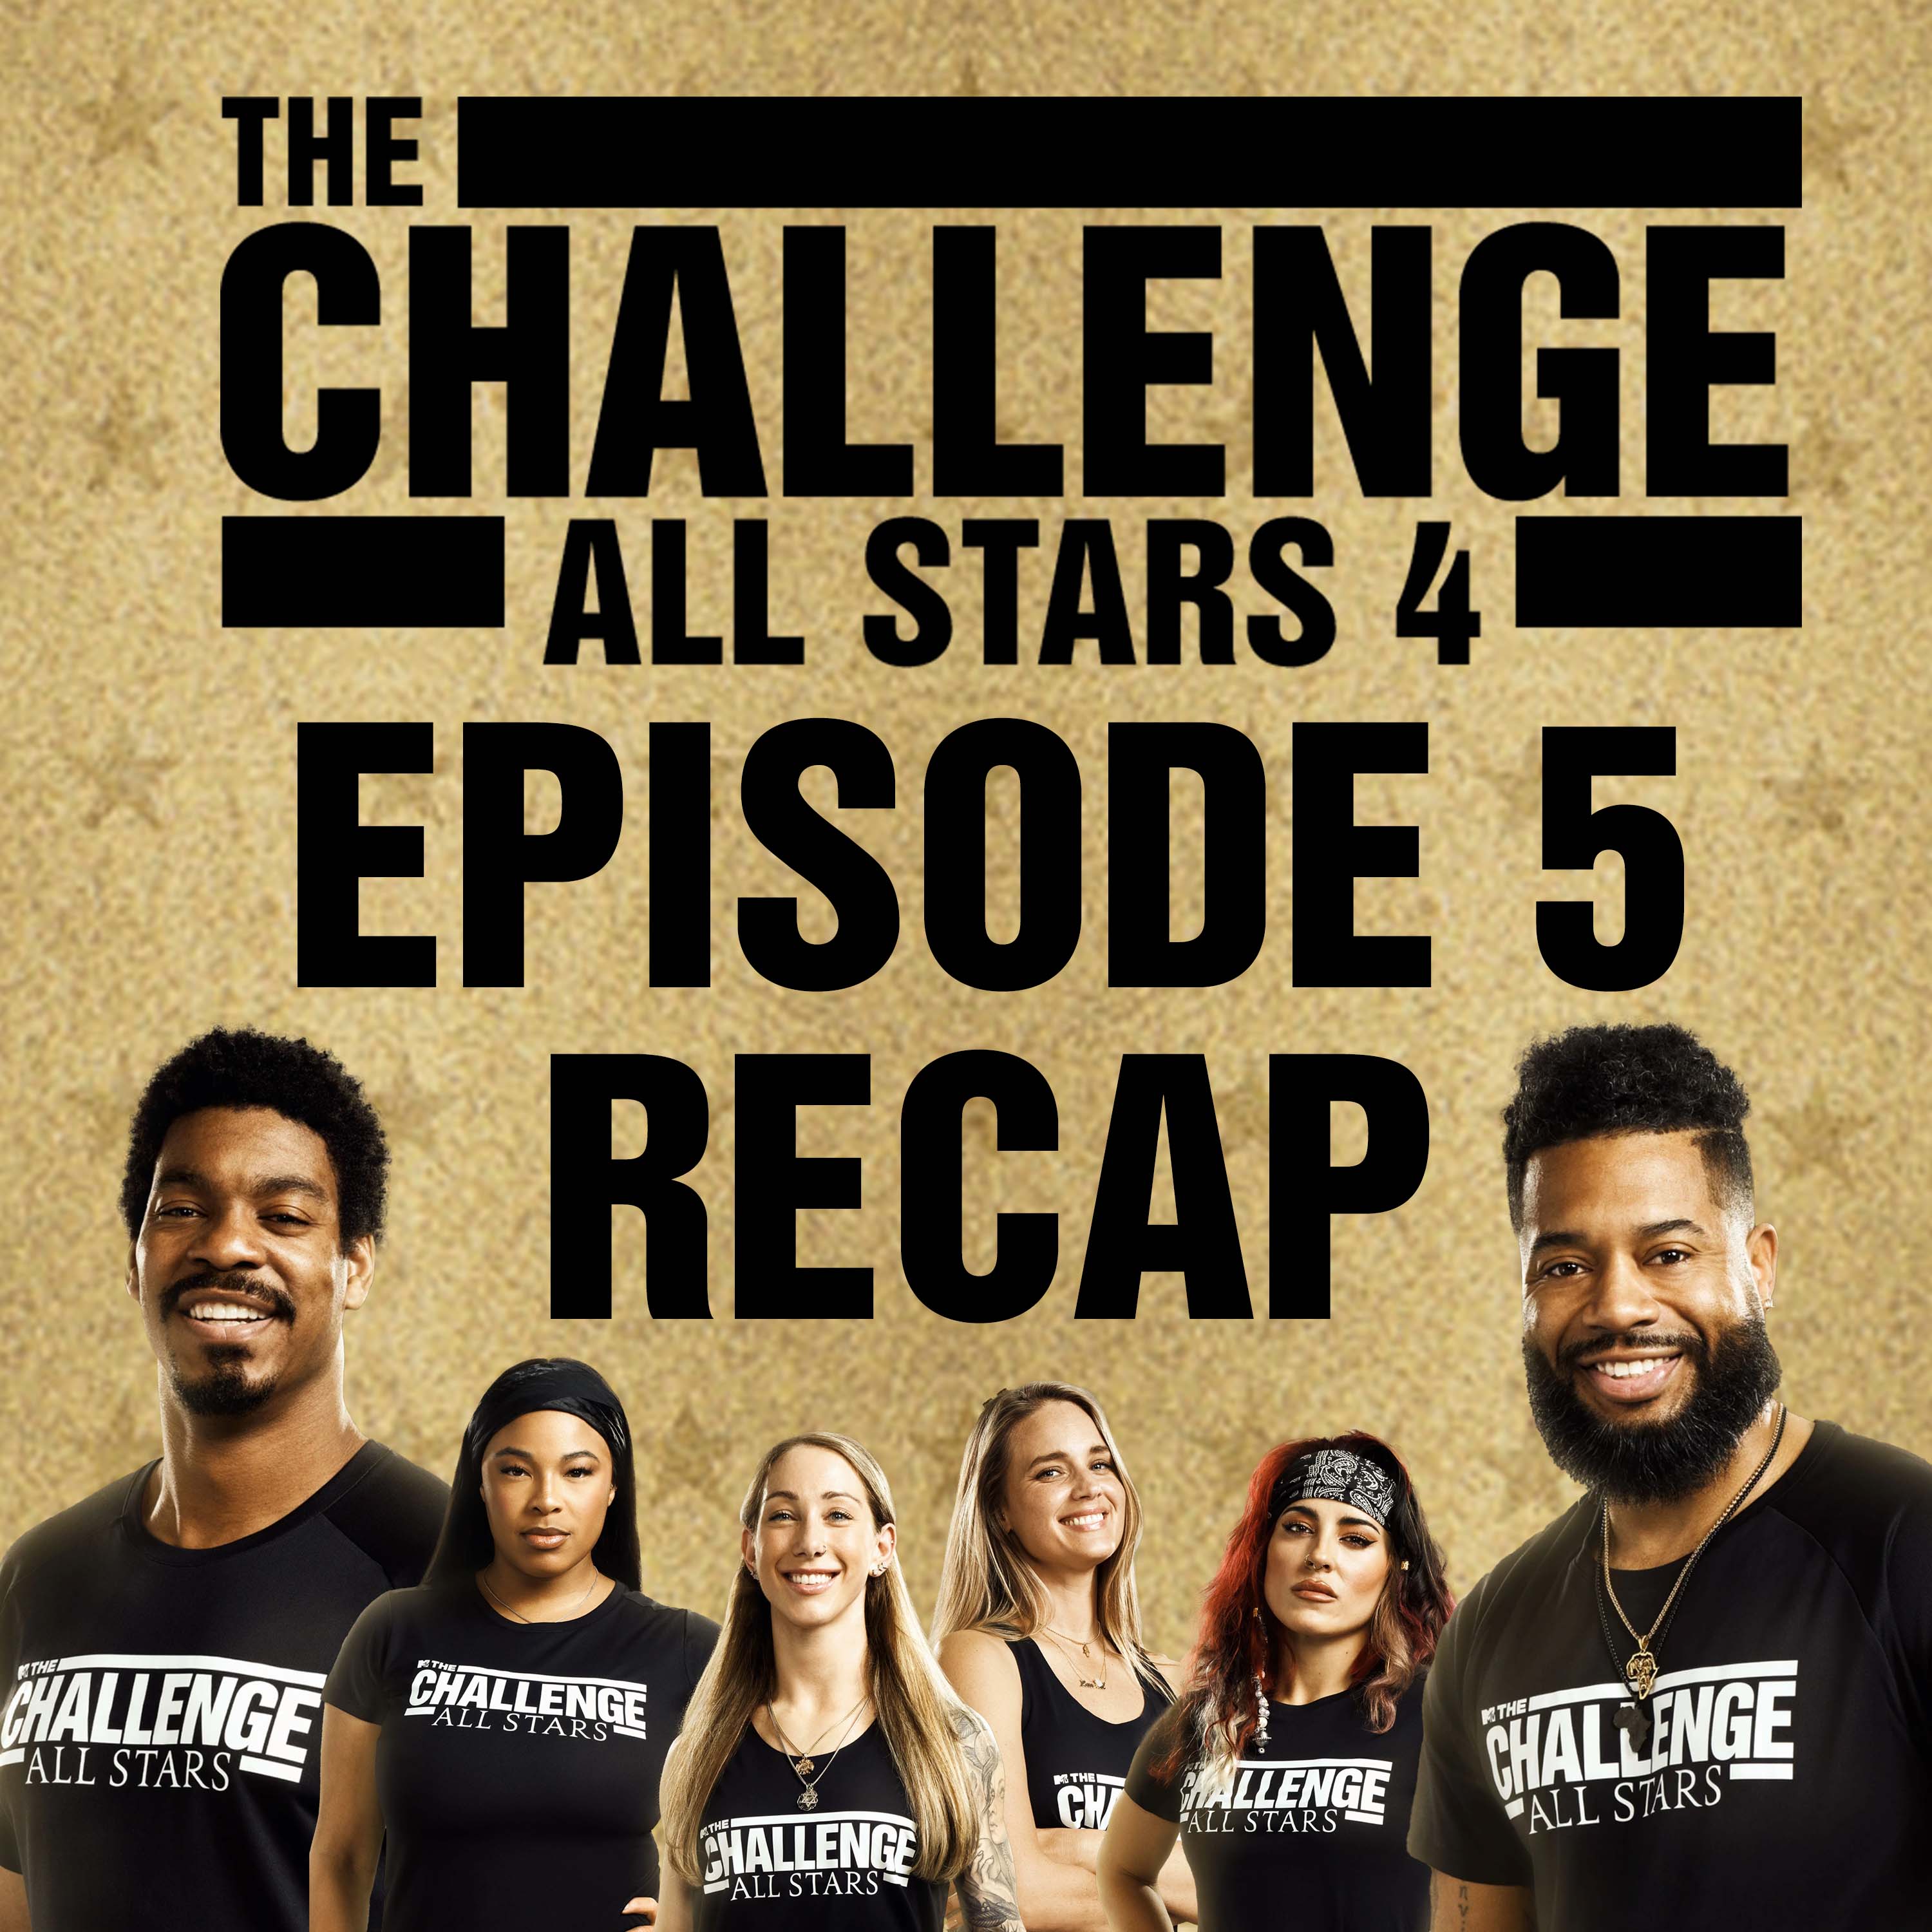 All Stars 4 Episode 5 Recap